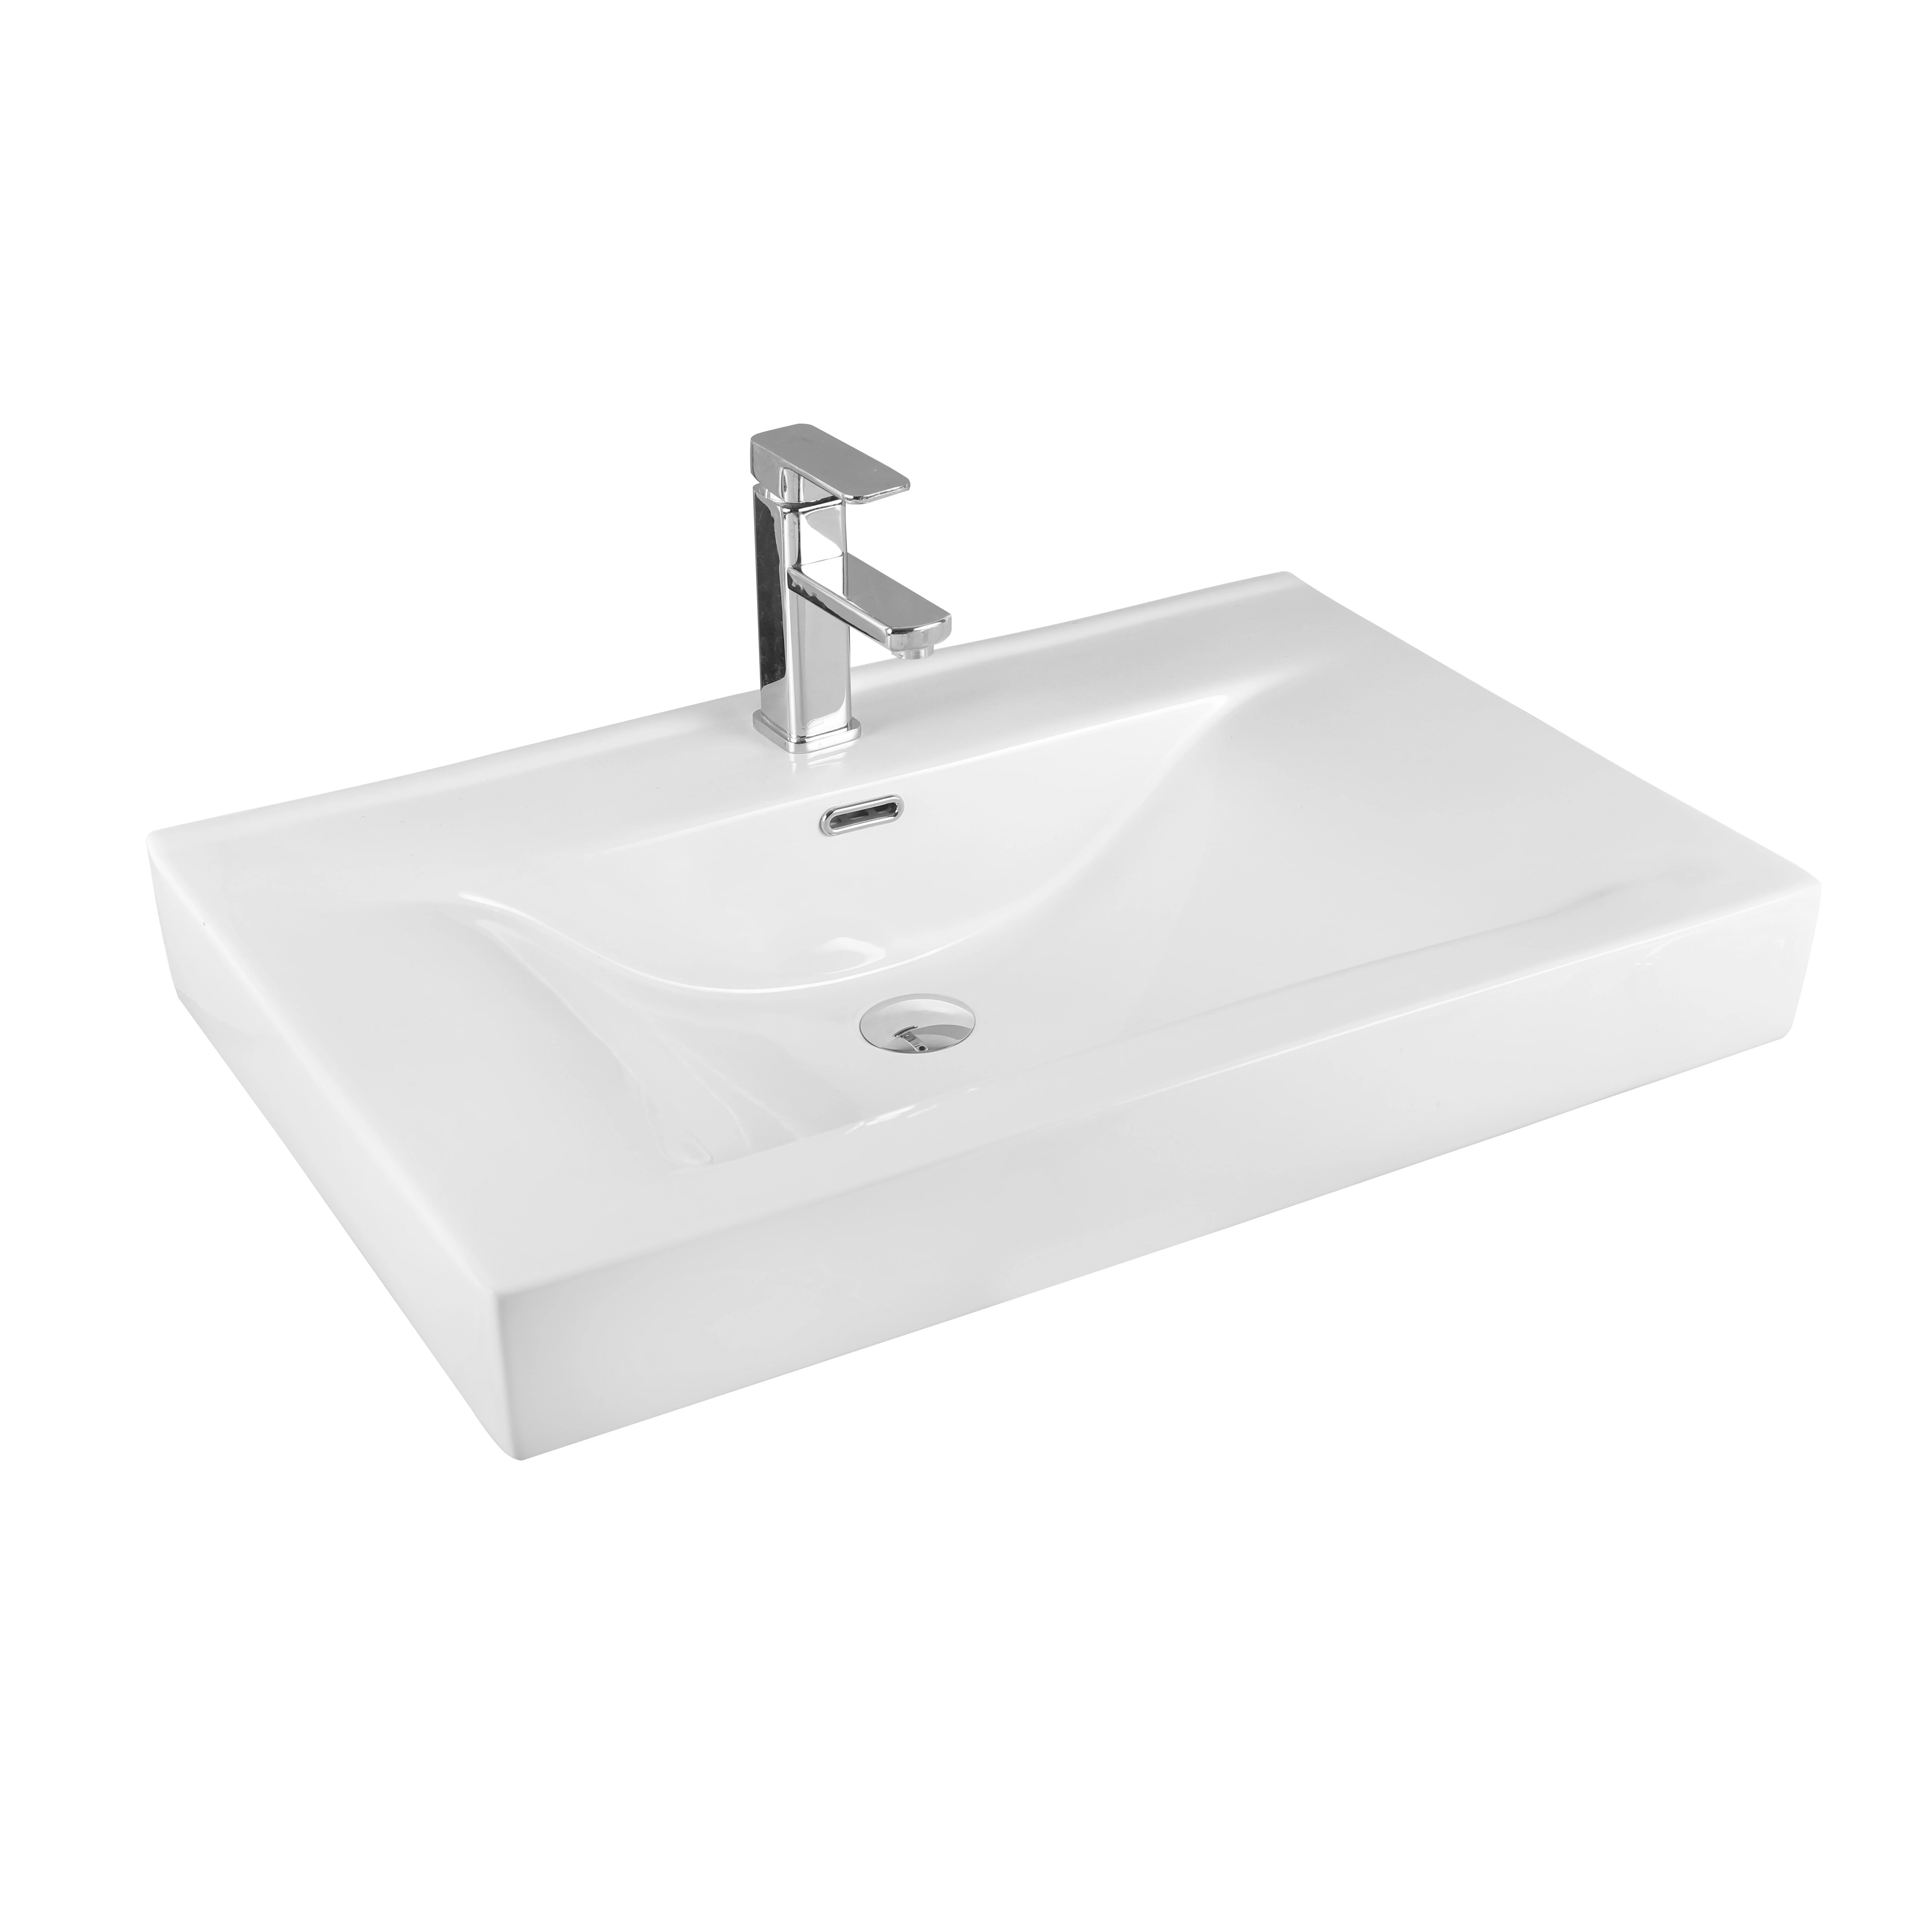 Favorable price hotel hand wash basins sink sanitary wares ceramic bathroom wash basin